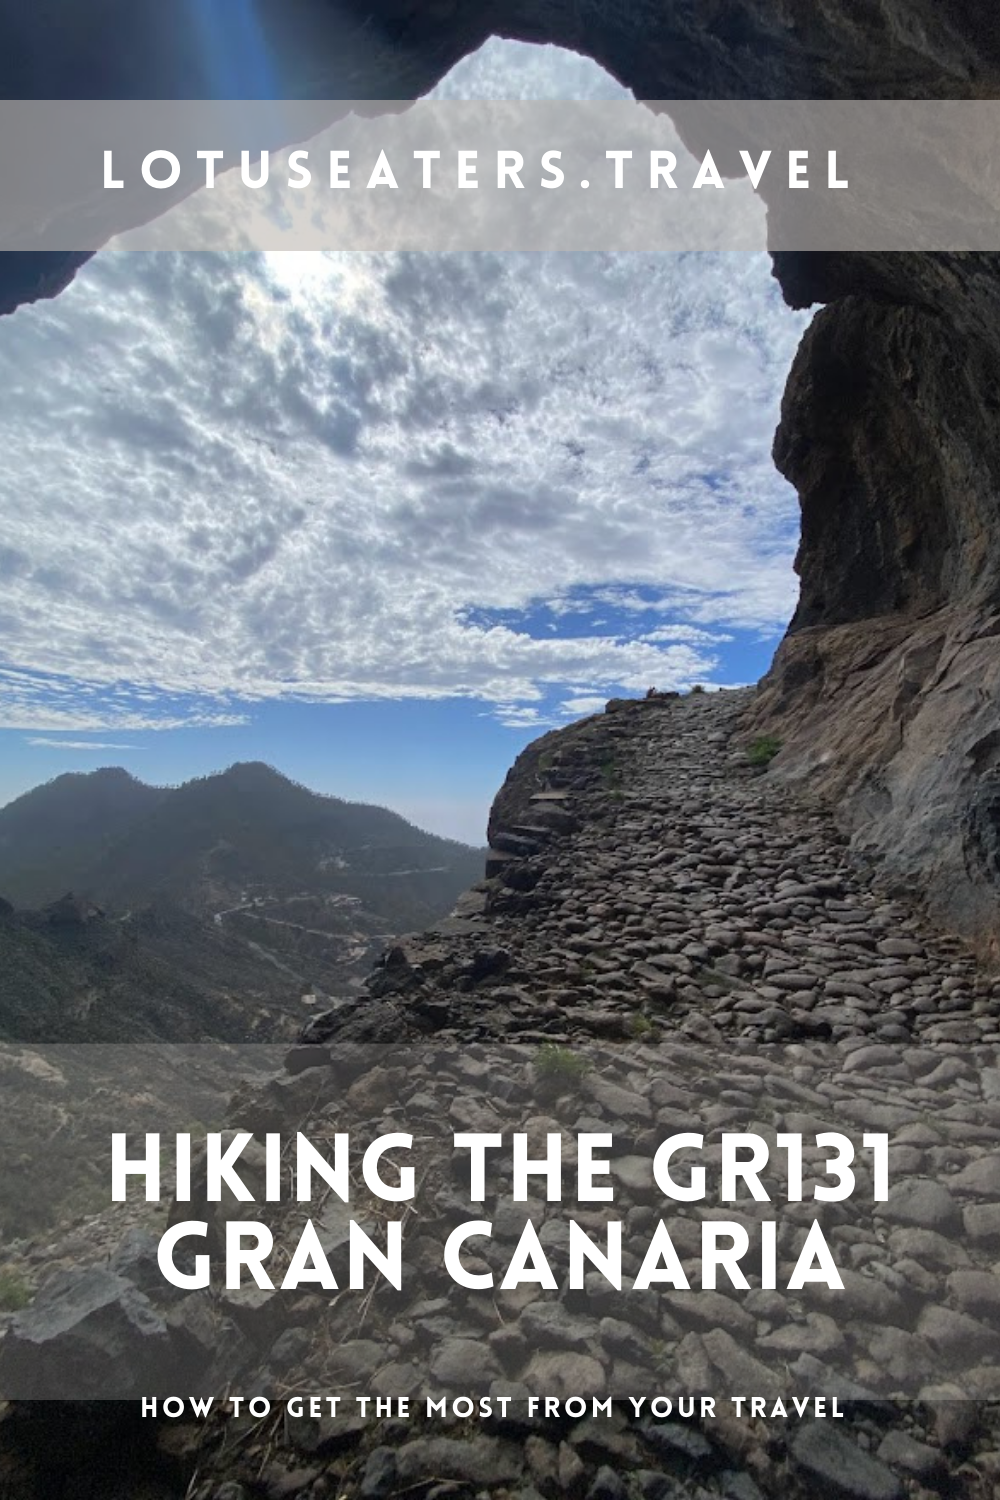 The GR131 Gran Canaria: A guide to hiking in Gran Canaria